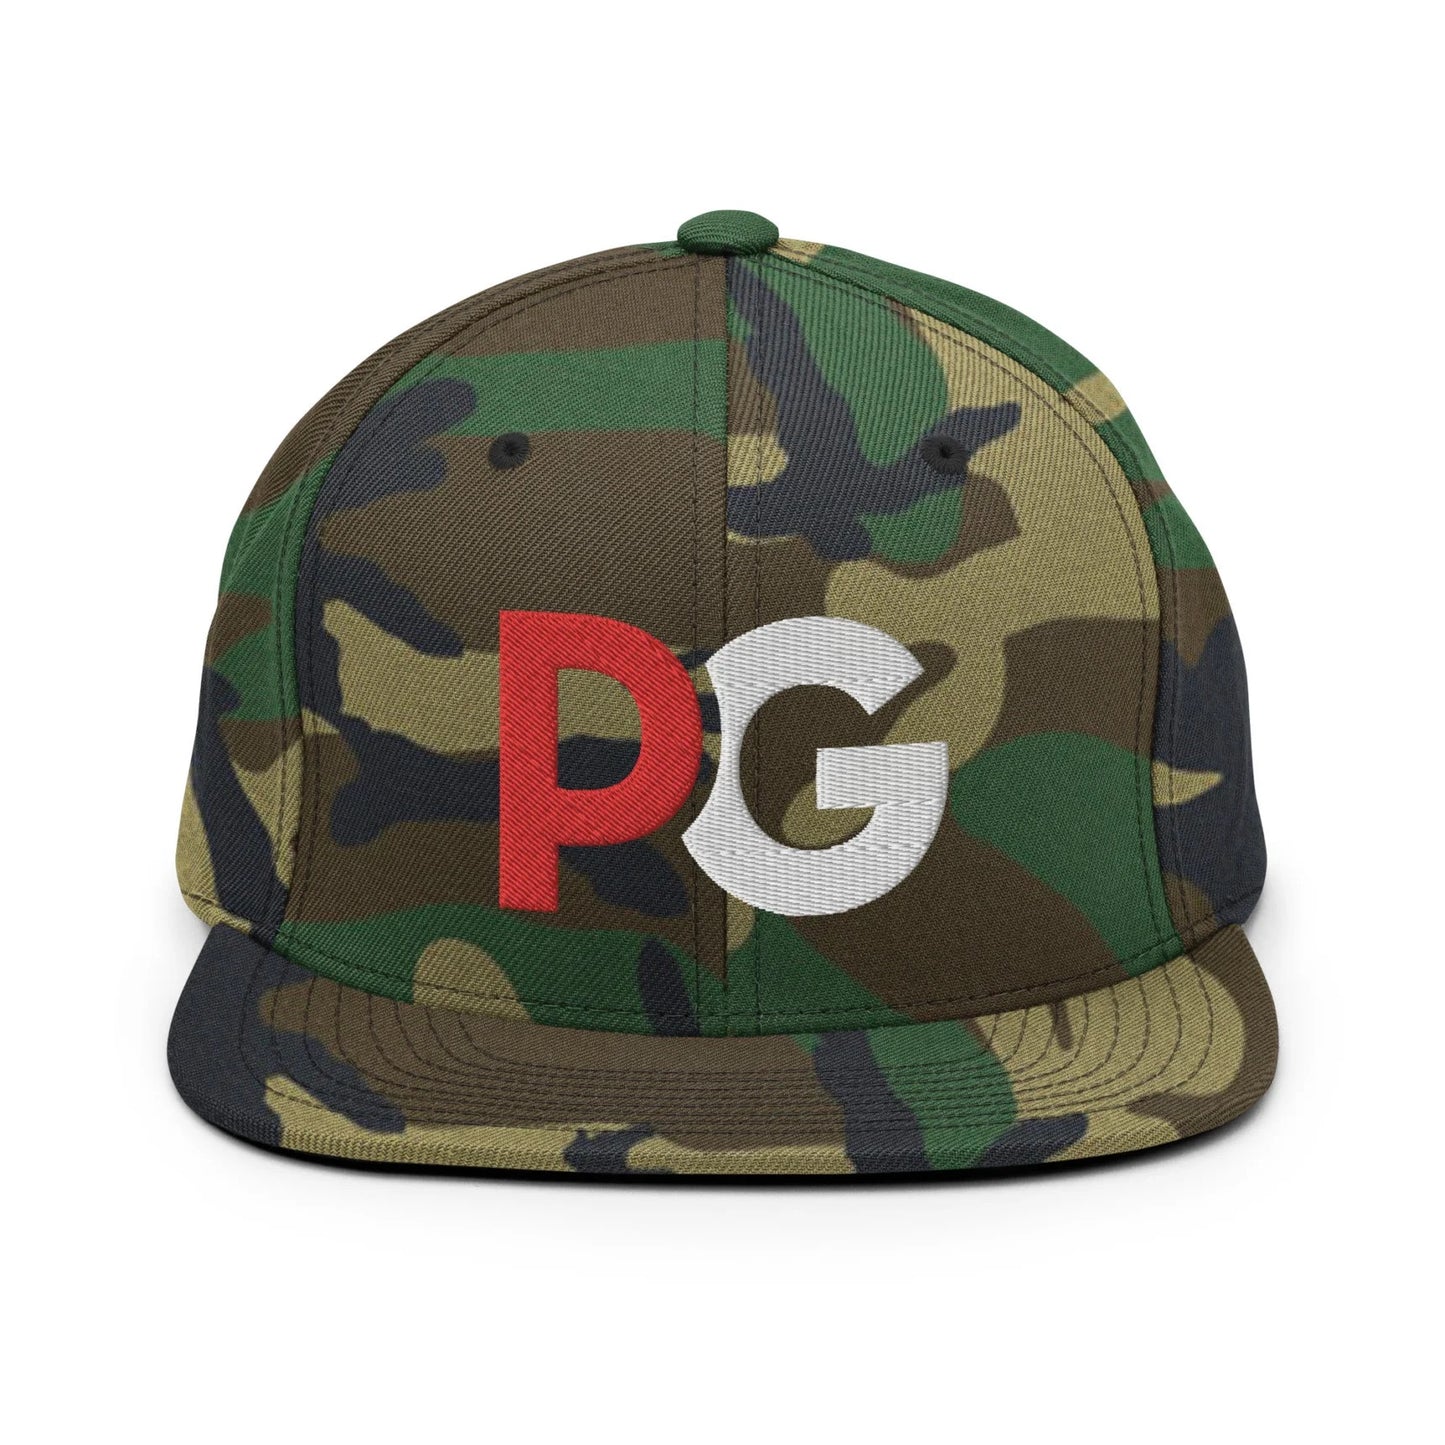 ProfesorGamingTV Snapback Hat by ShowZone in green camo camouflage